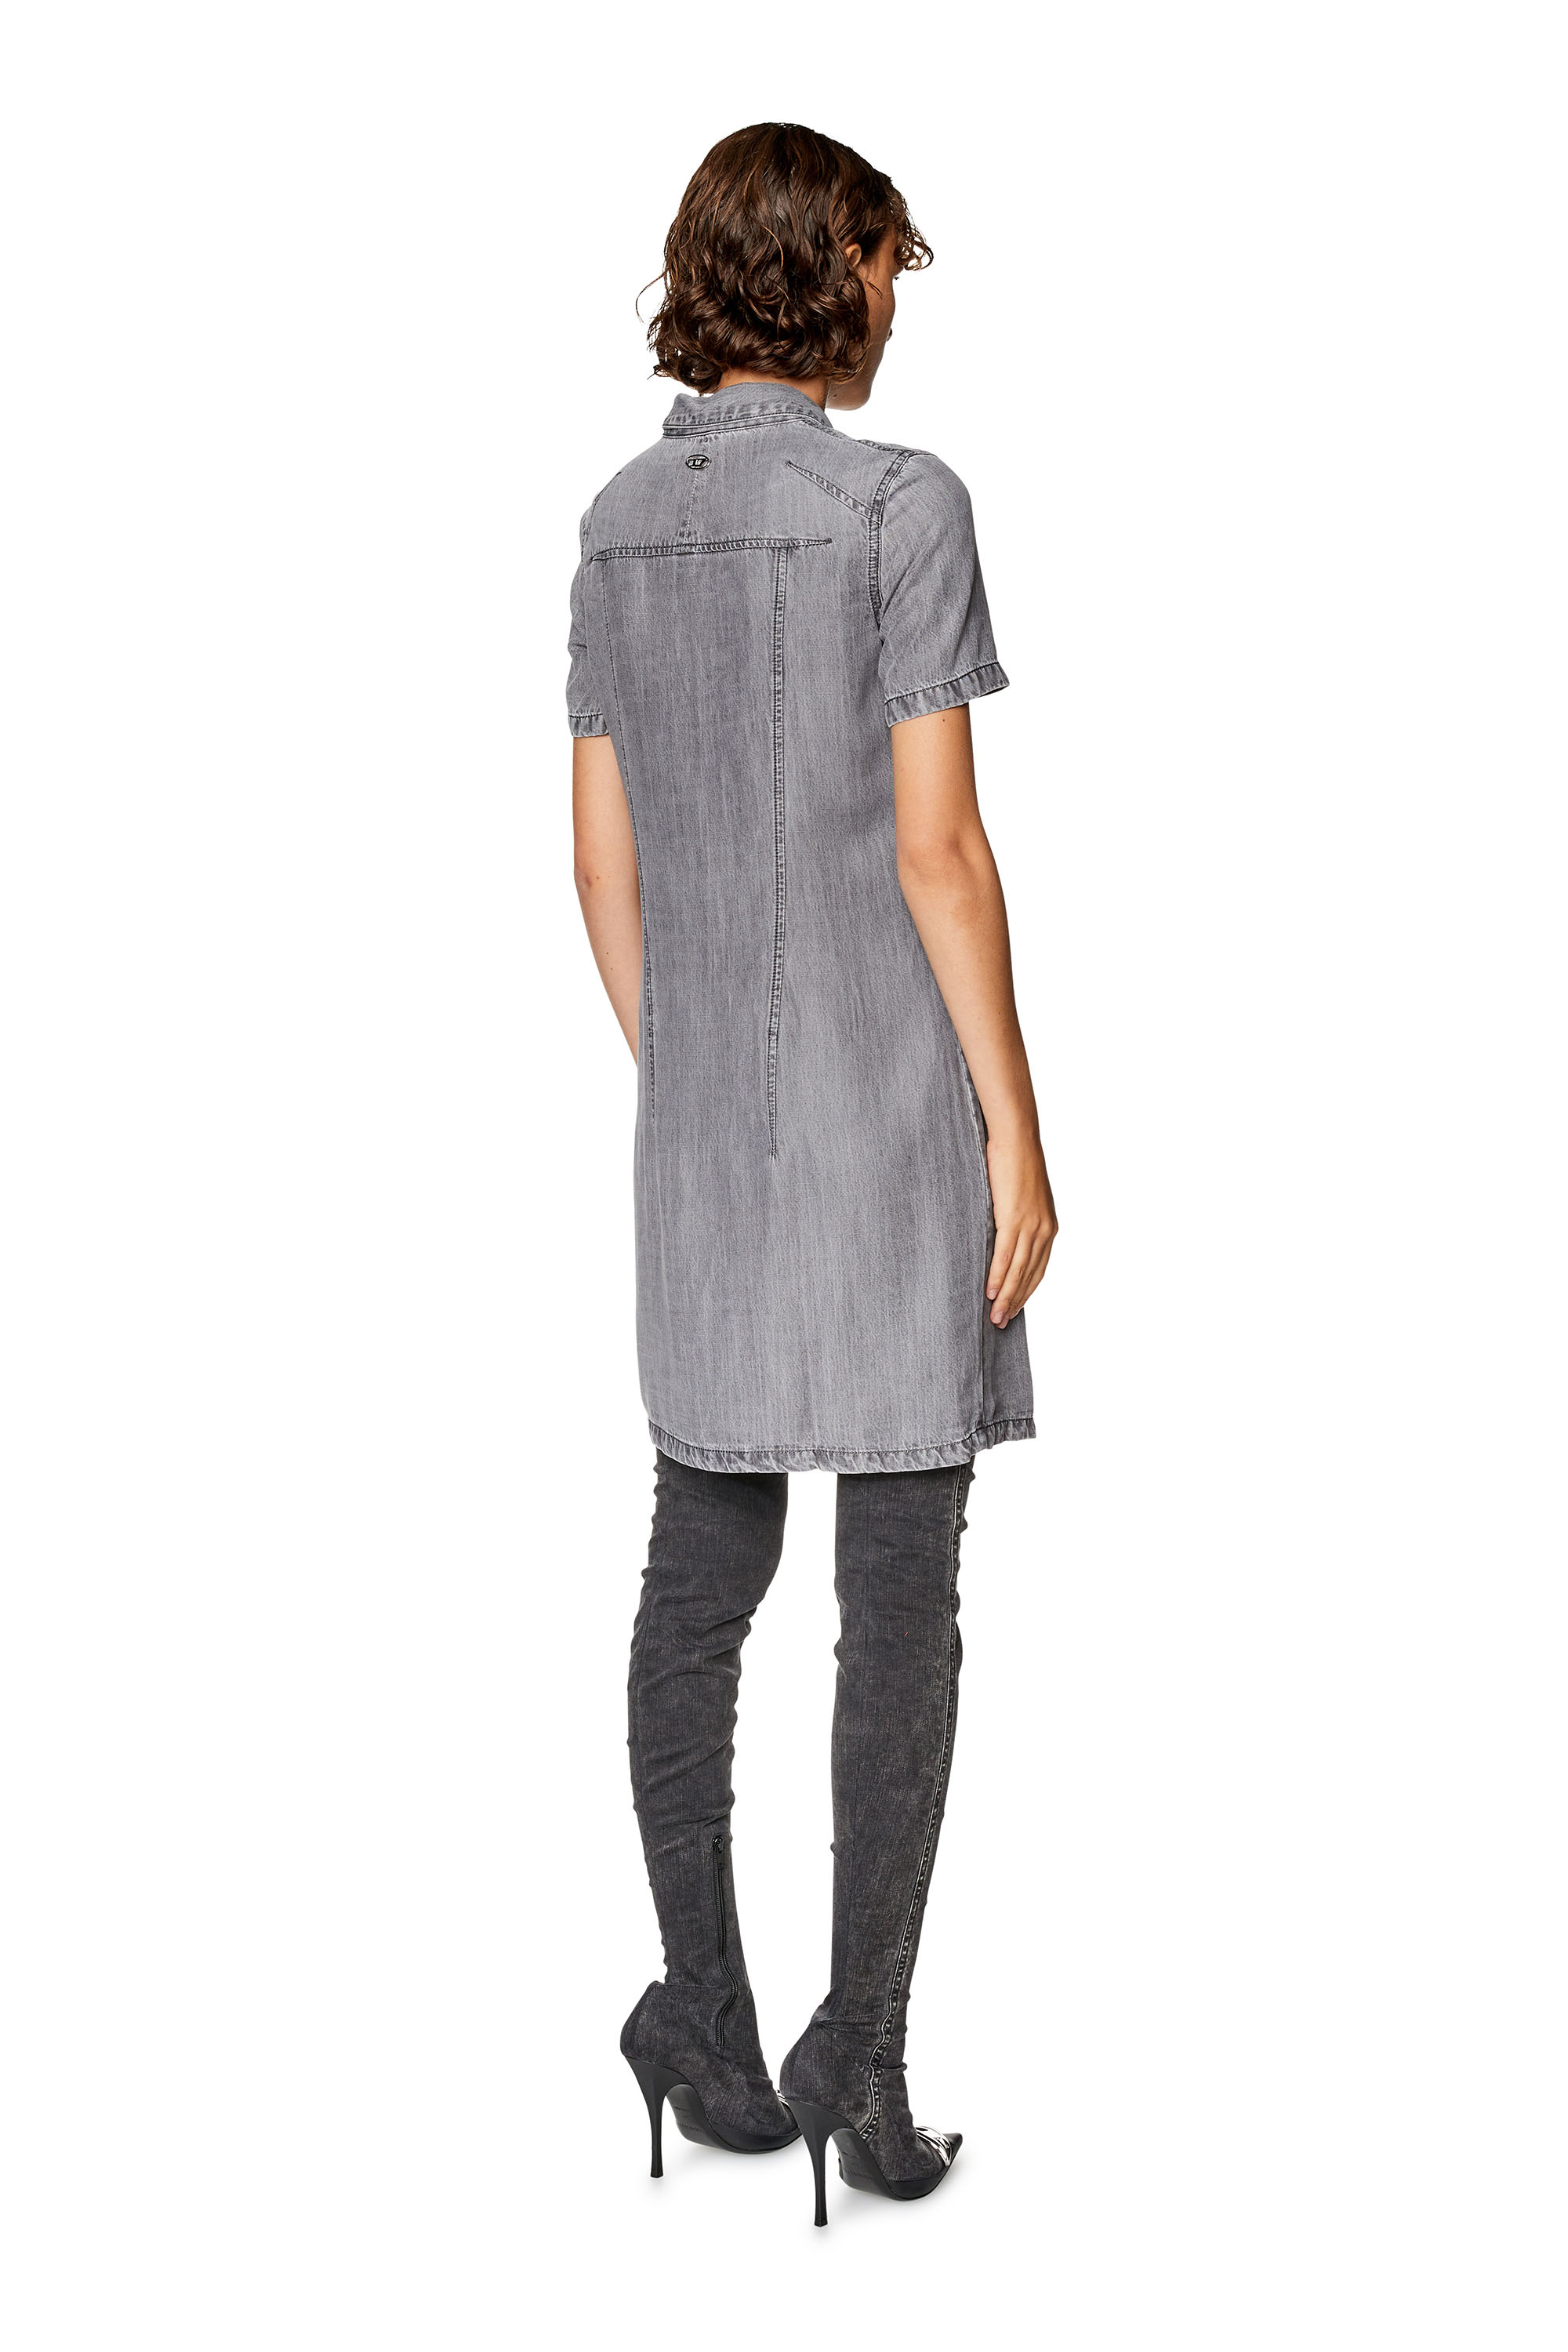 Diesel - DE-SHIRTY, Woman Buttoned shirt dress in light denim in Grey - Image 3